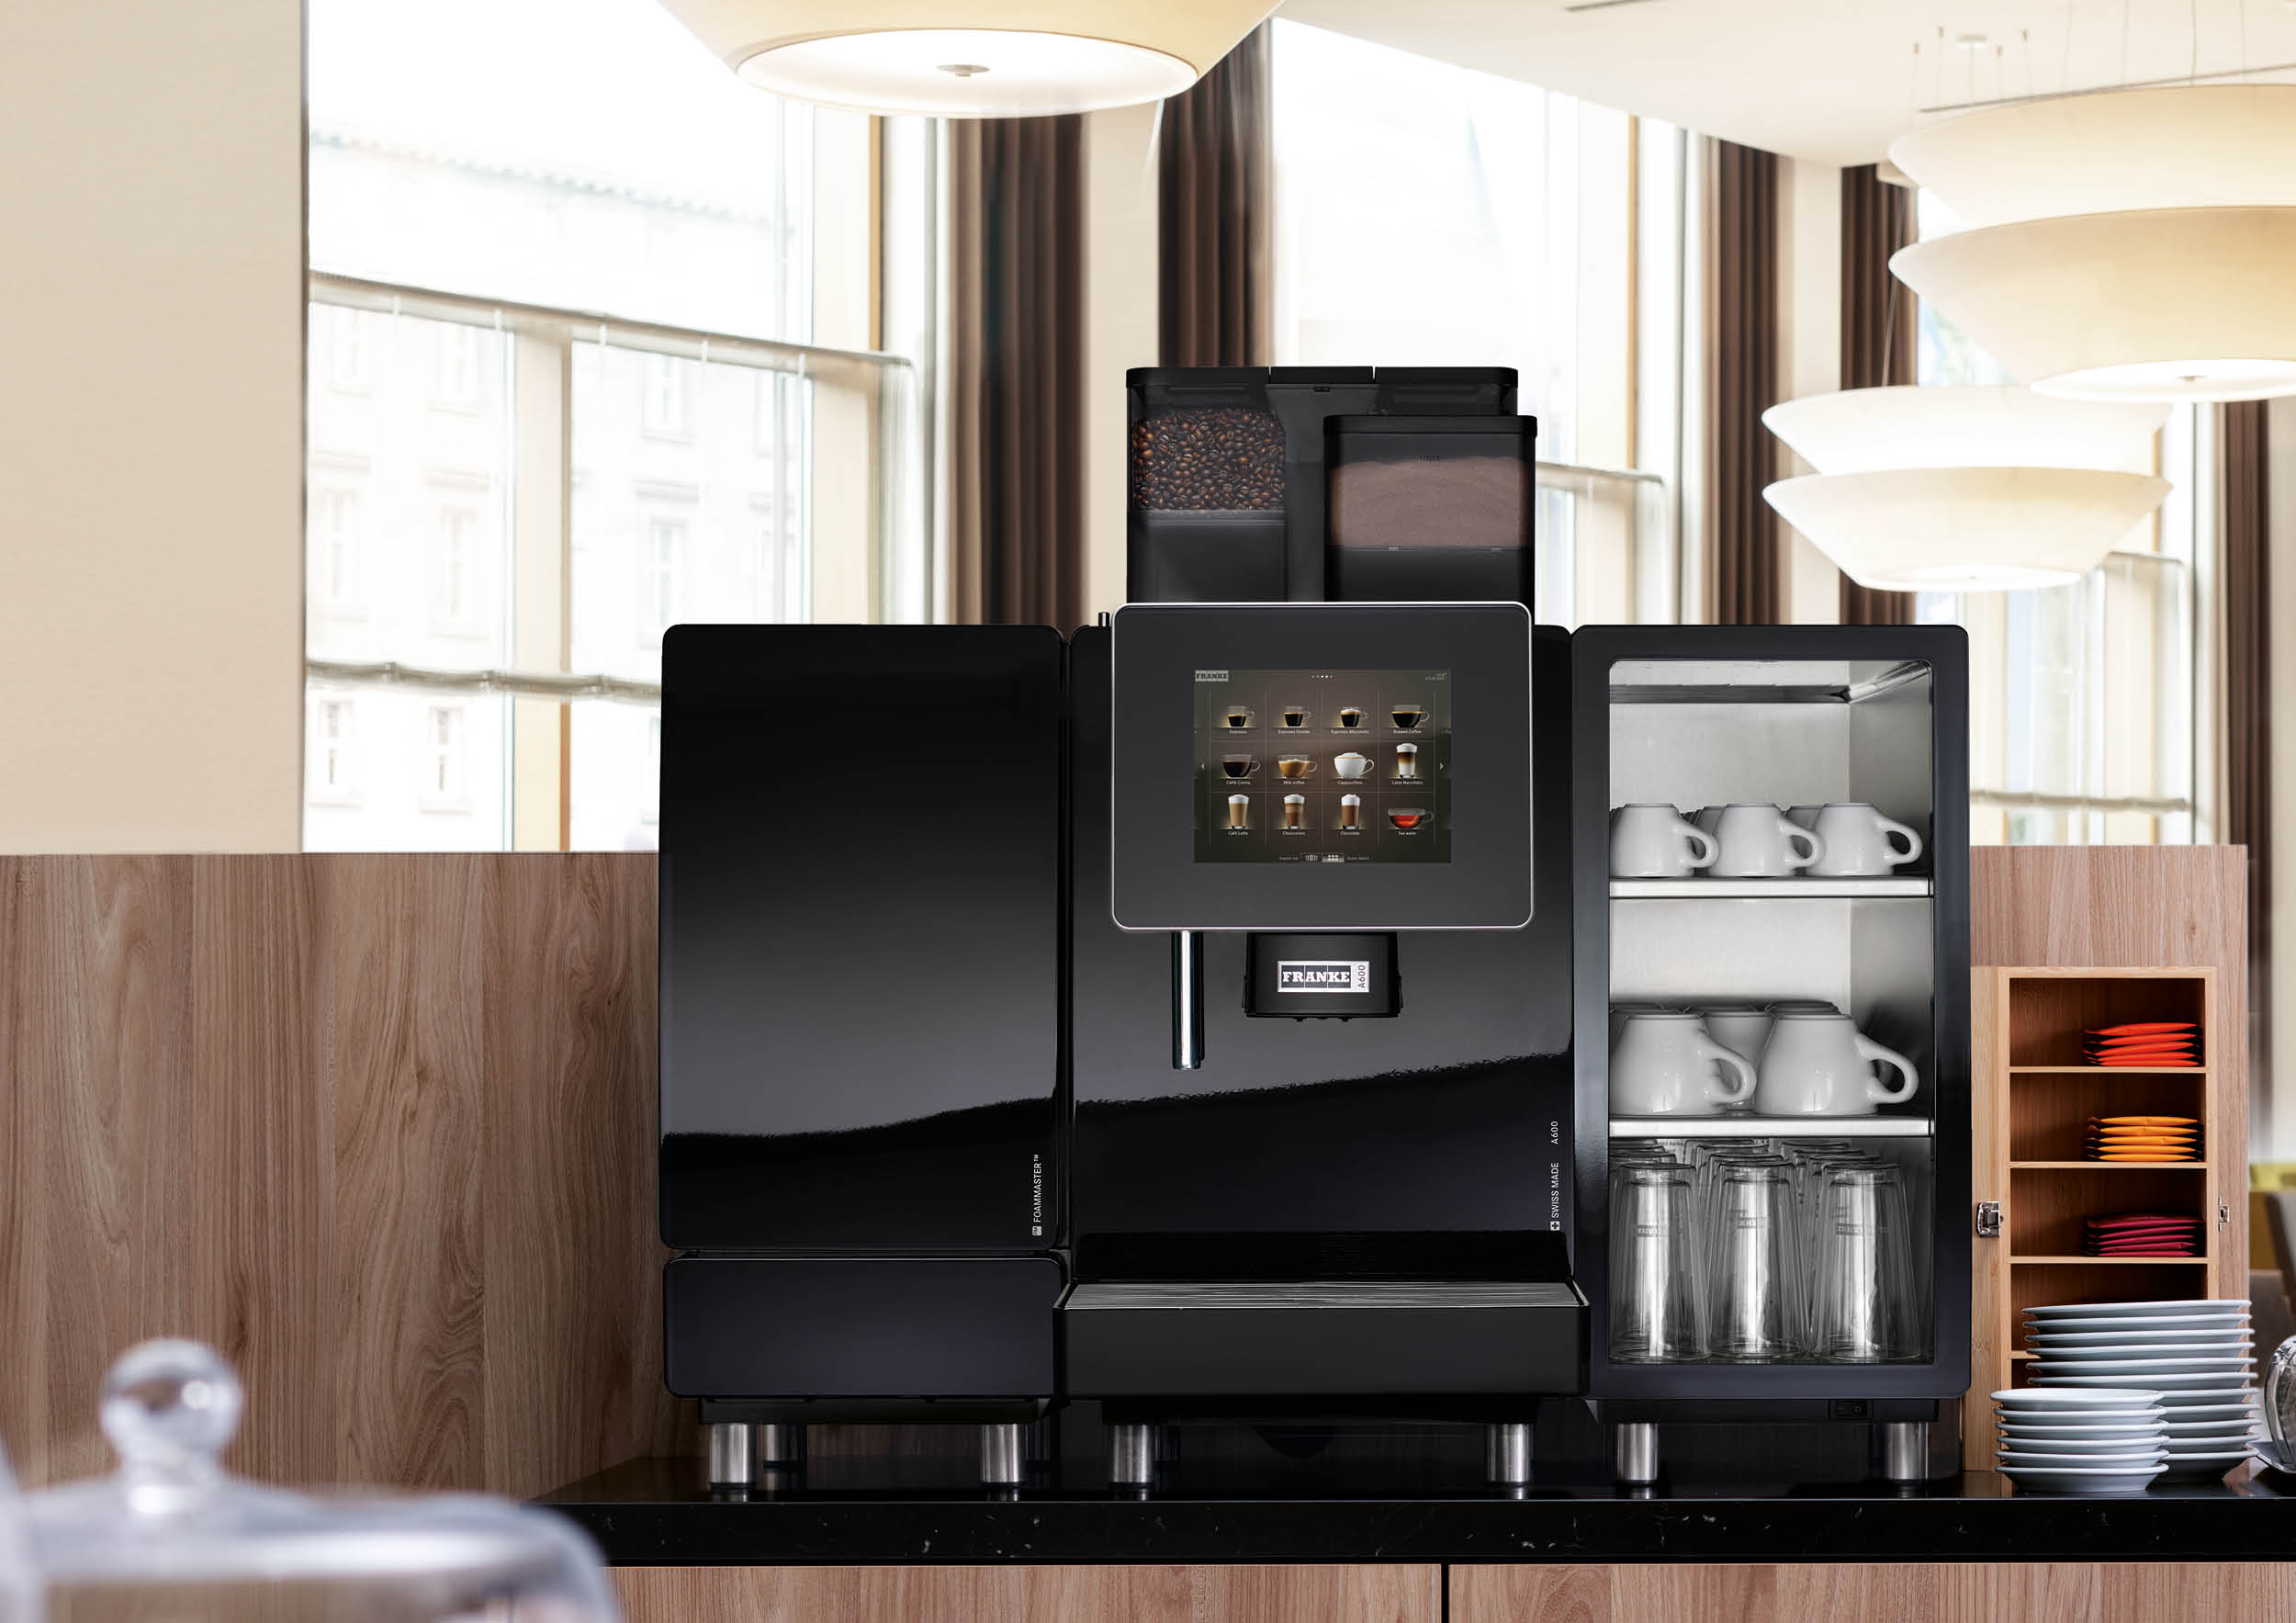 Franke Coffee Systems, fully automatic coffee machine Franke A600 in hotel breakfast area